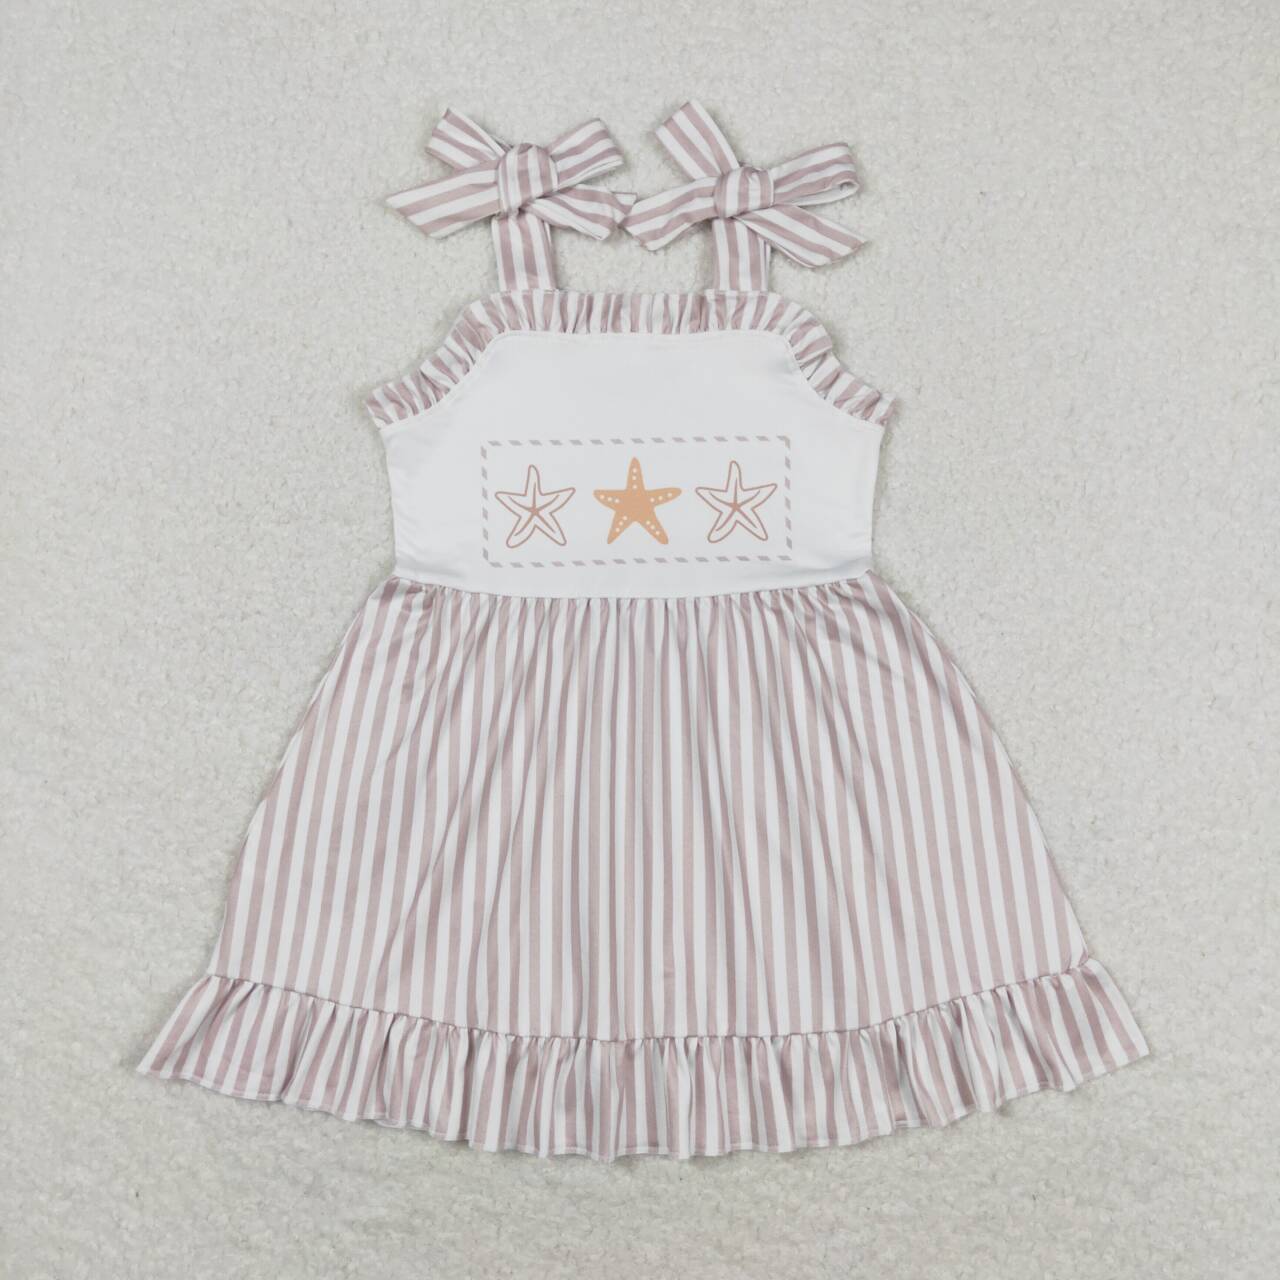 Starfish Stripes Print Sibling Summer Matching Clothes